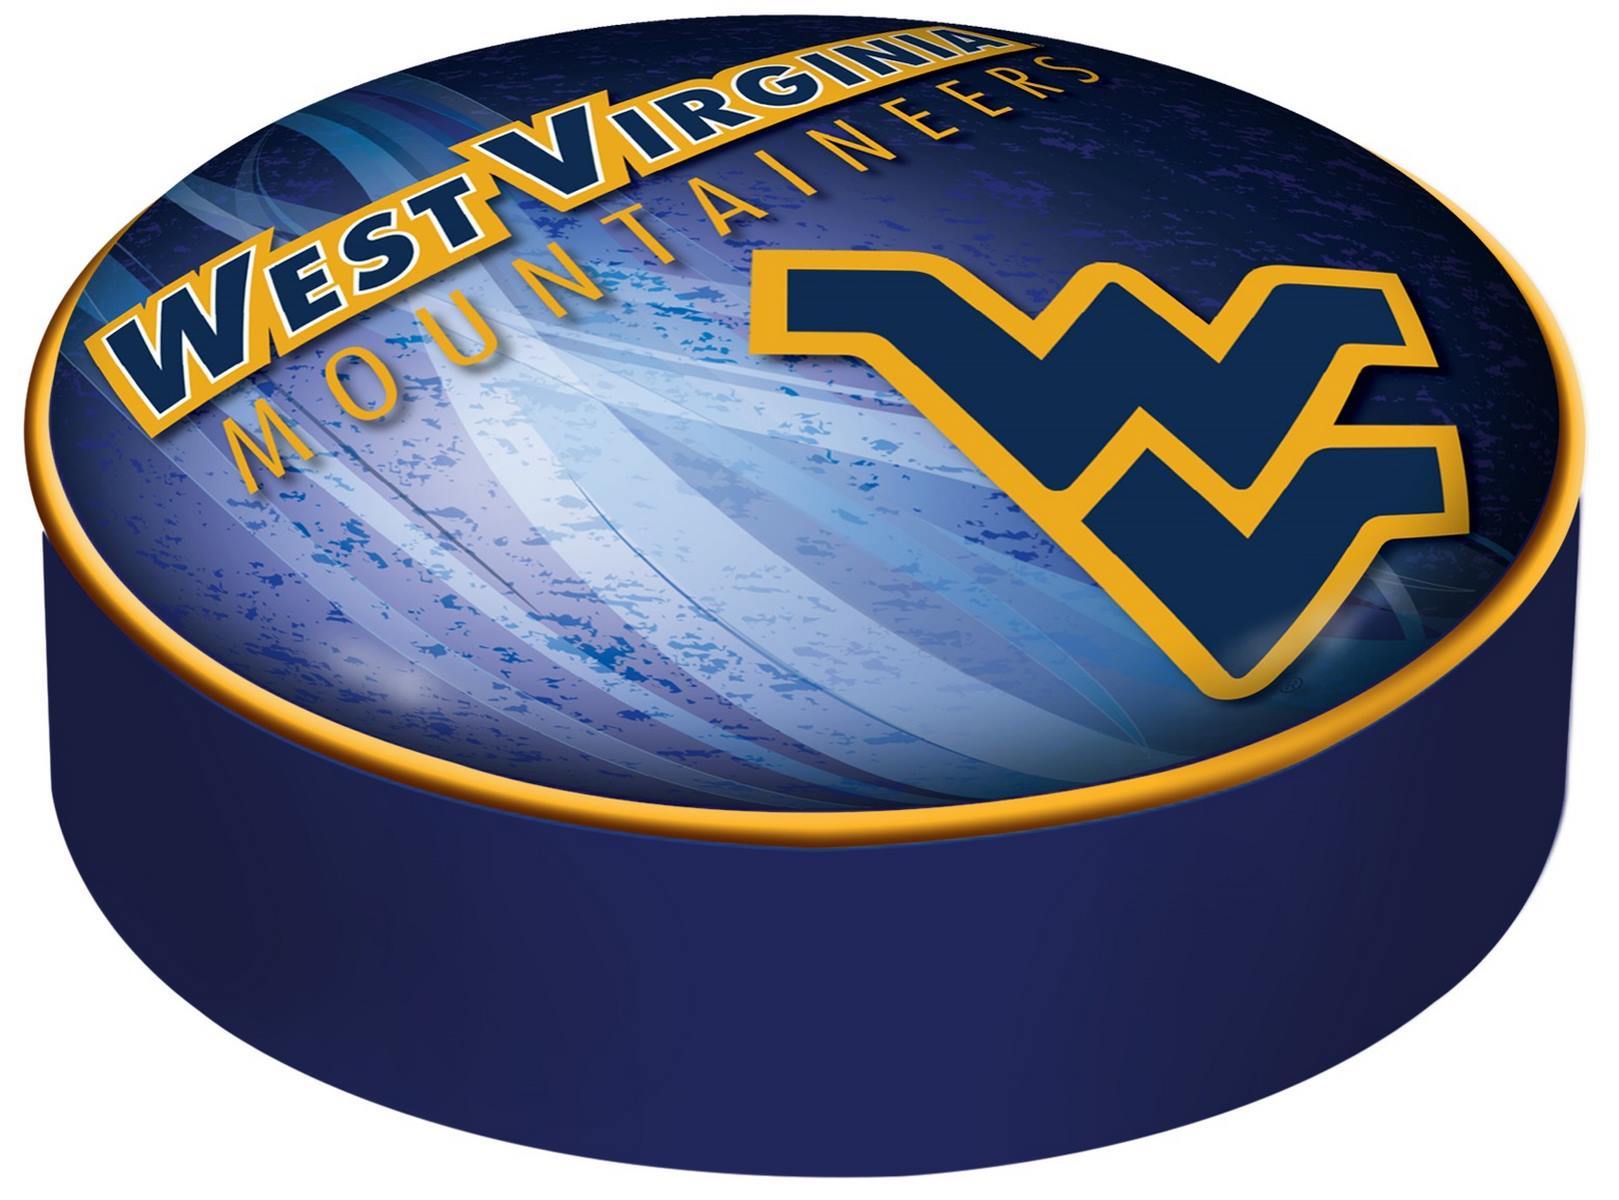 West Virginia Mountaineers Logo - West Virginia University Seat Cover - West Virginia Mountaineers Logo